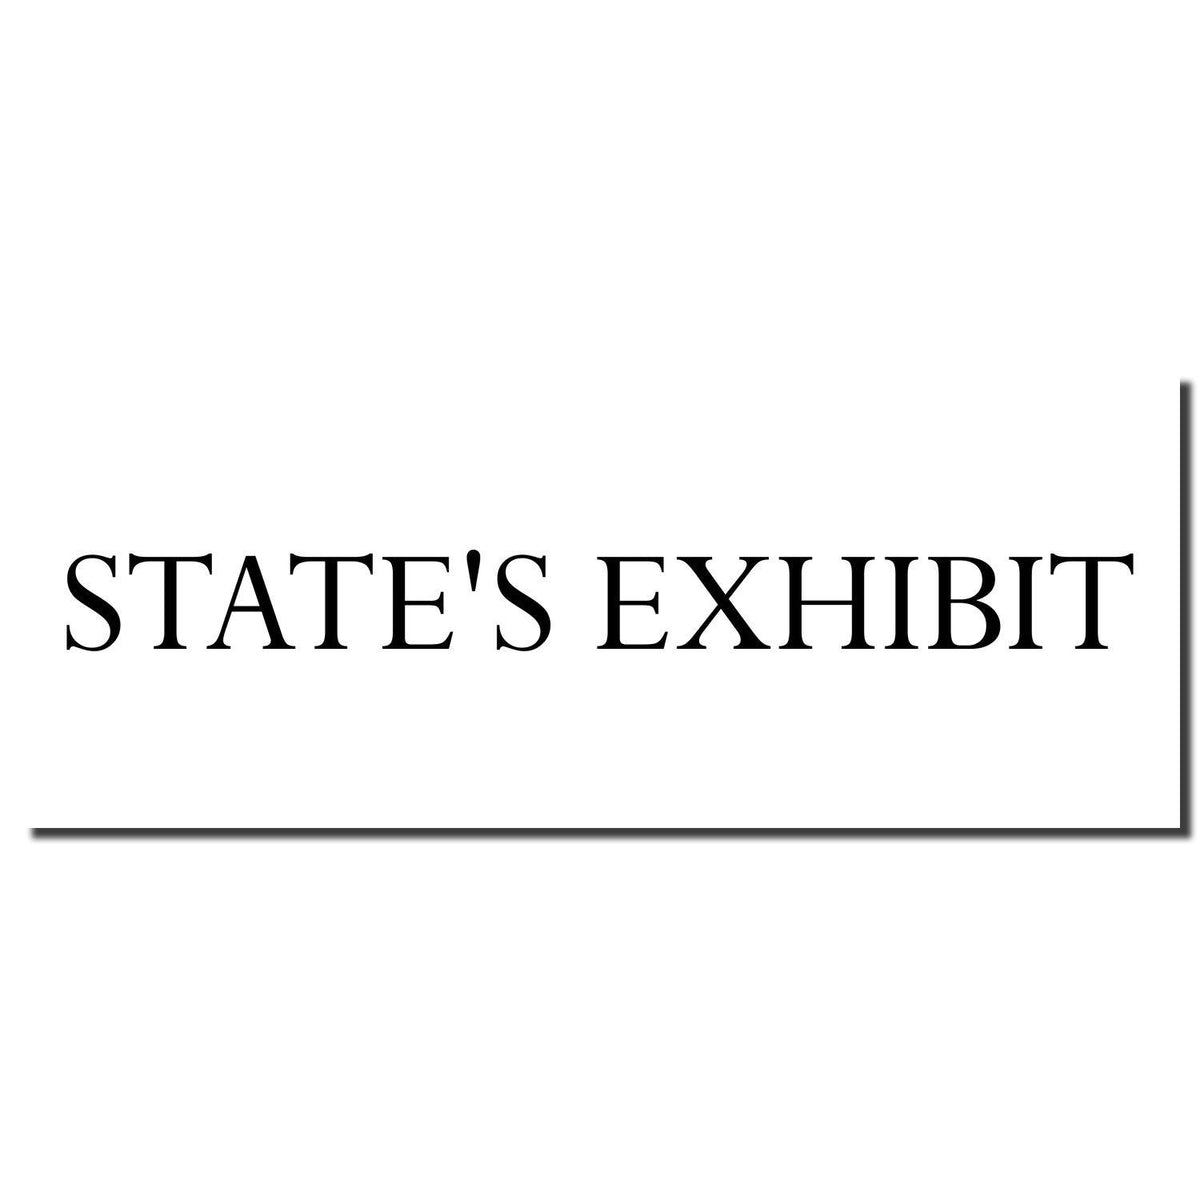 Enlarged Imprint States Exhibit Legal Rubber Stamp Sample